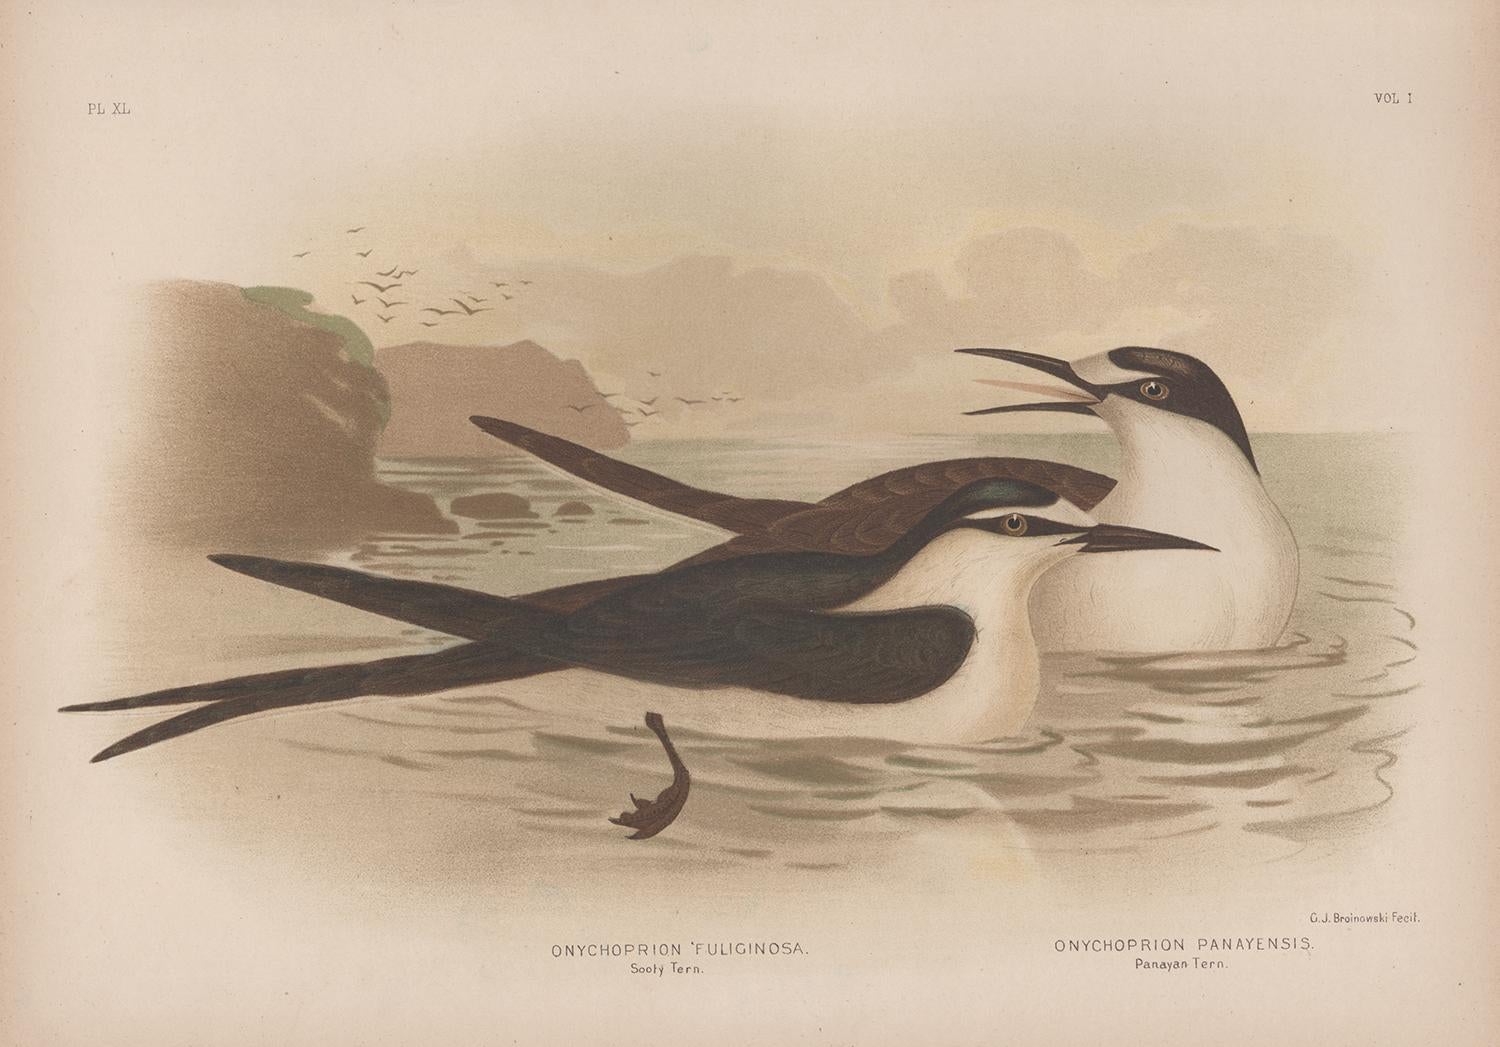 Sooty Tern et Panayan Tern, ancien tirage chromolithographie d'oiseau de mer, 1889